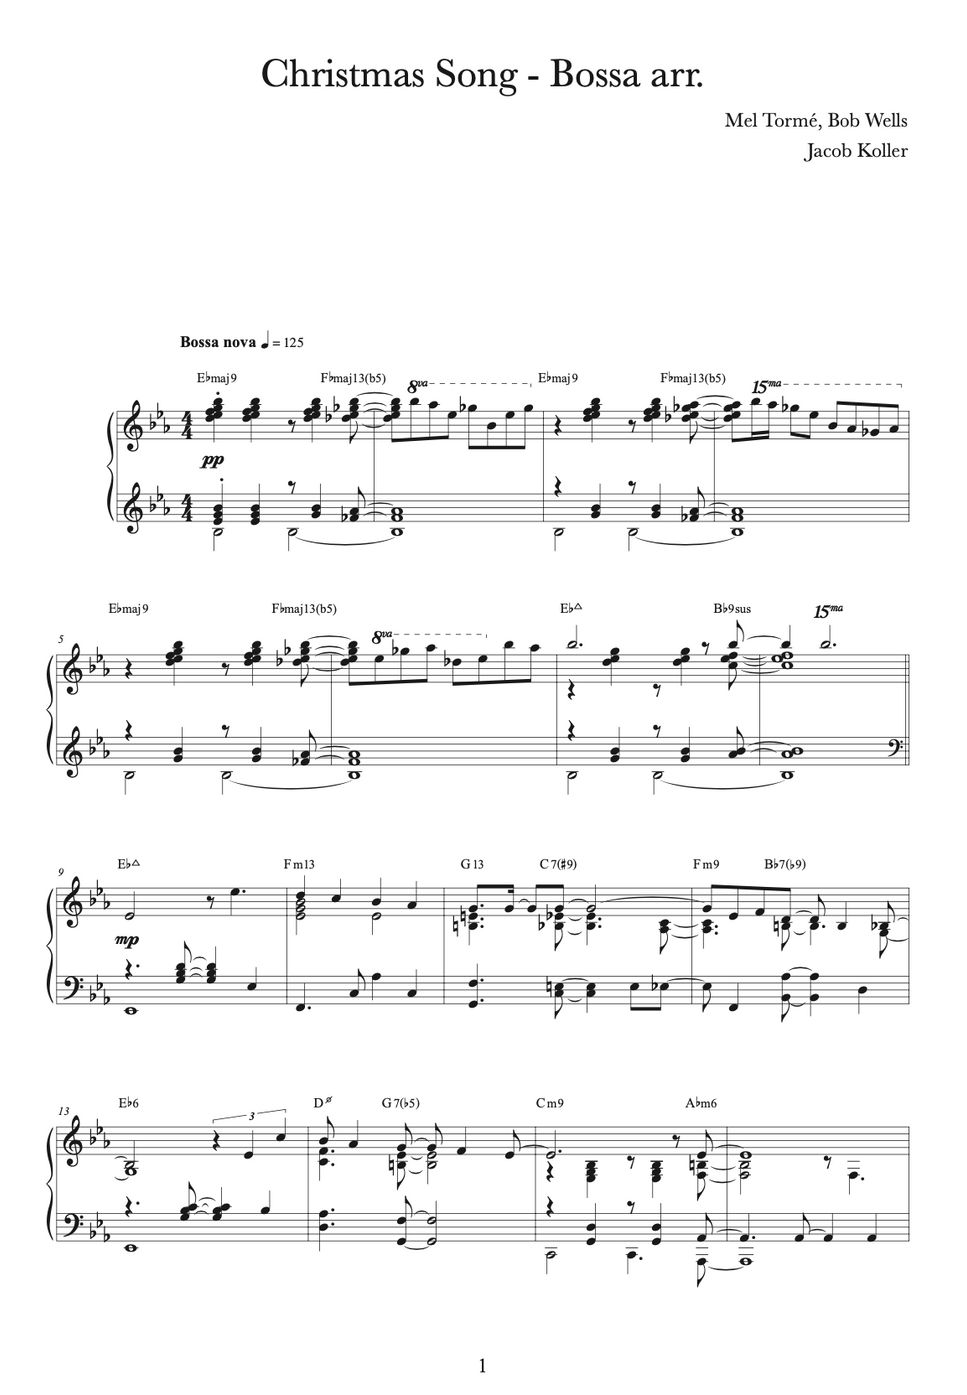 Mel Torme - The Christmas Song (Bossa nova piano arrangement) by Jacob Koller